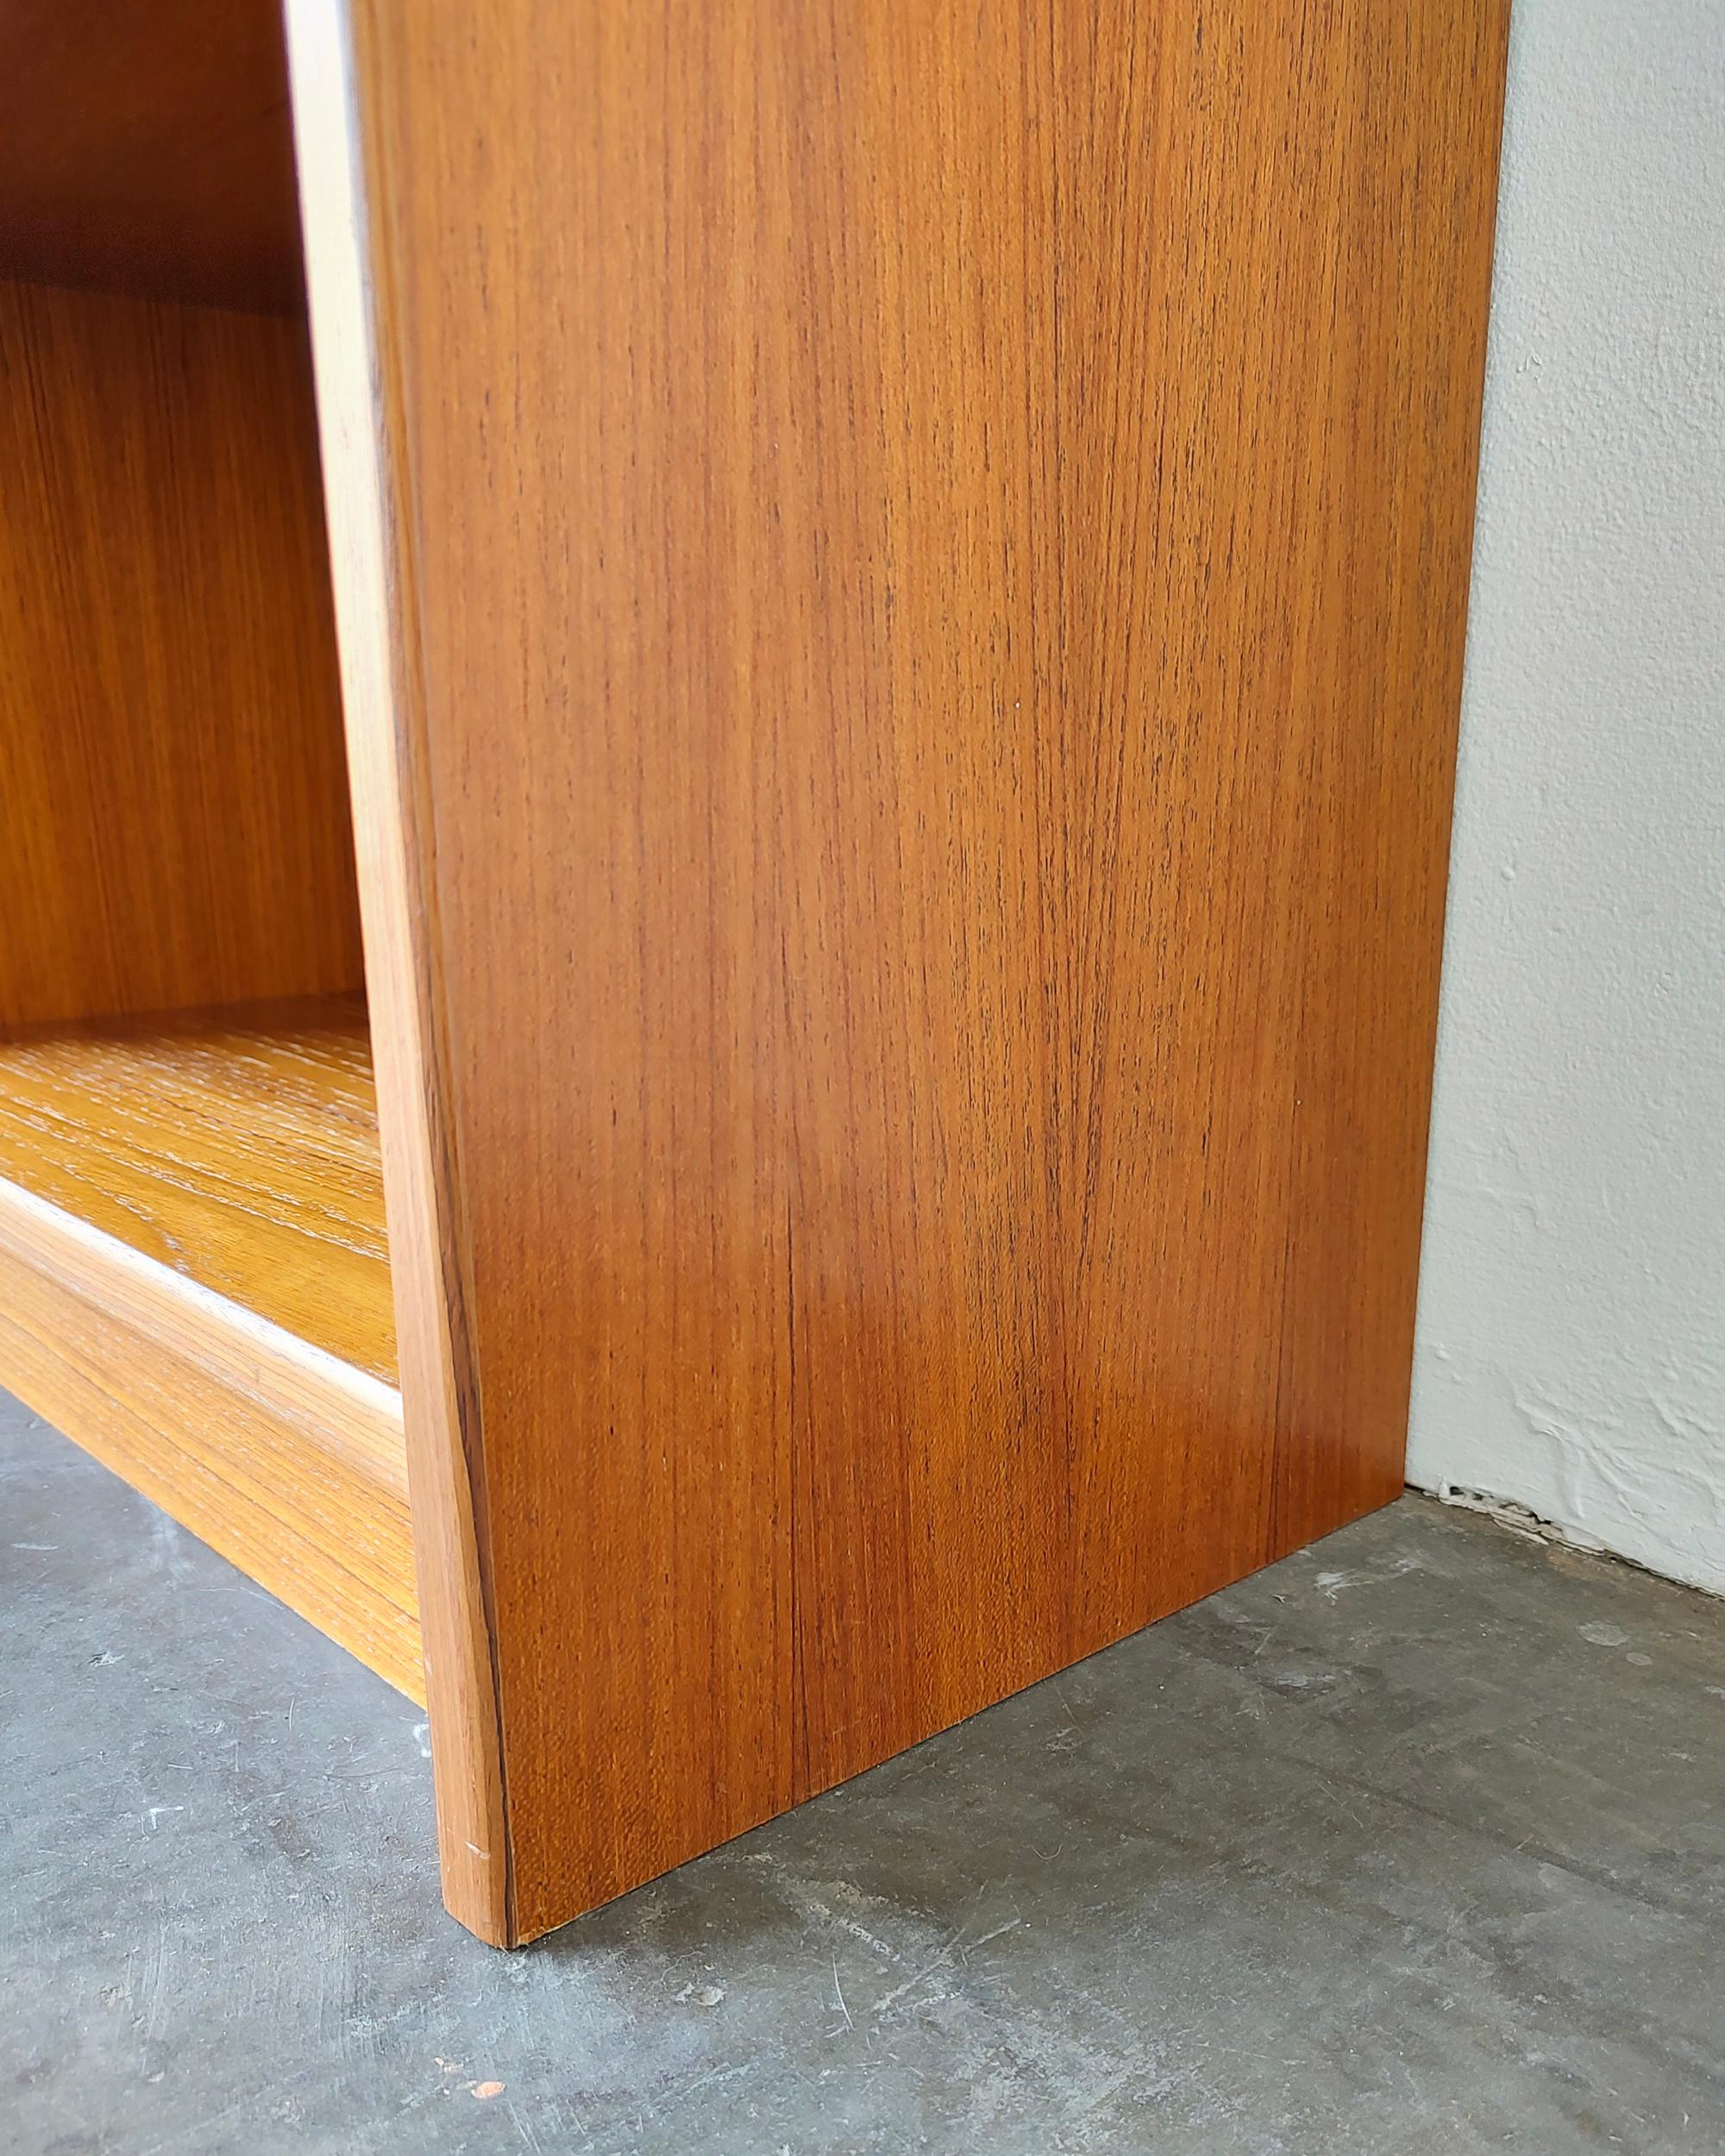 20th Century Tall Narrow Mid-Century Danish Modern Teak Wood Shelf 1960s For Sale